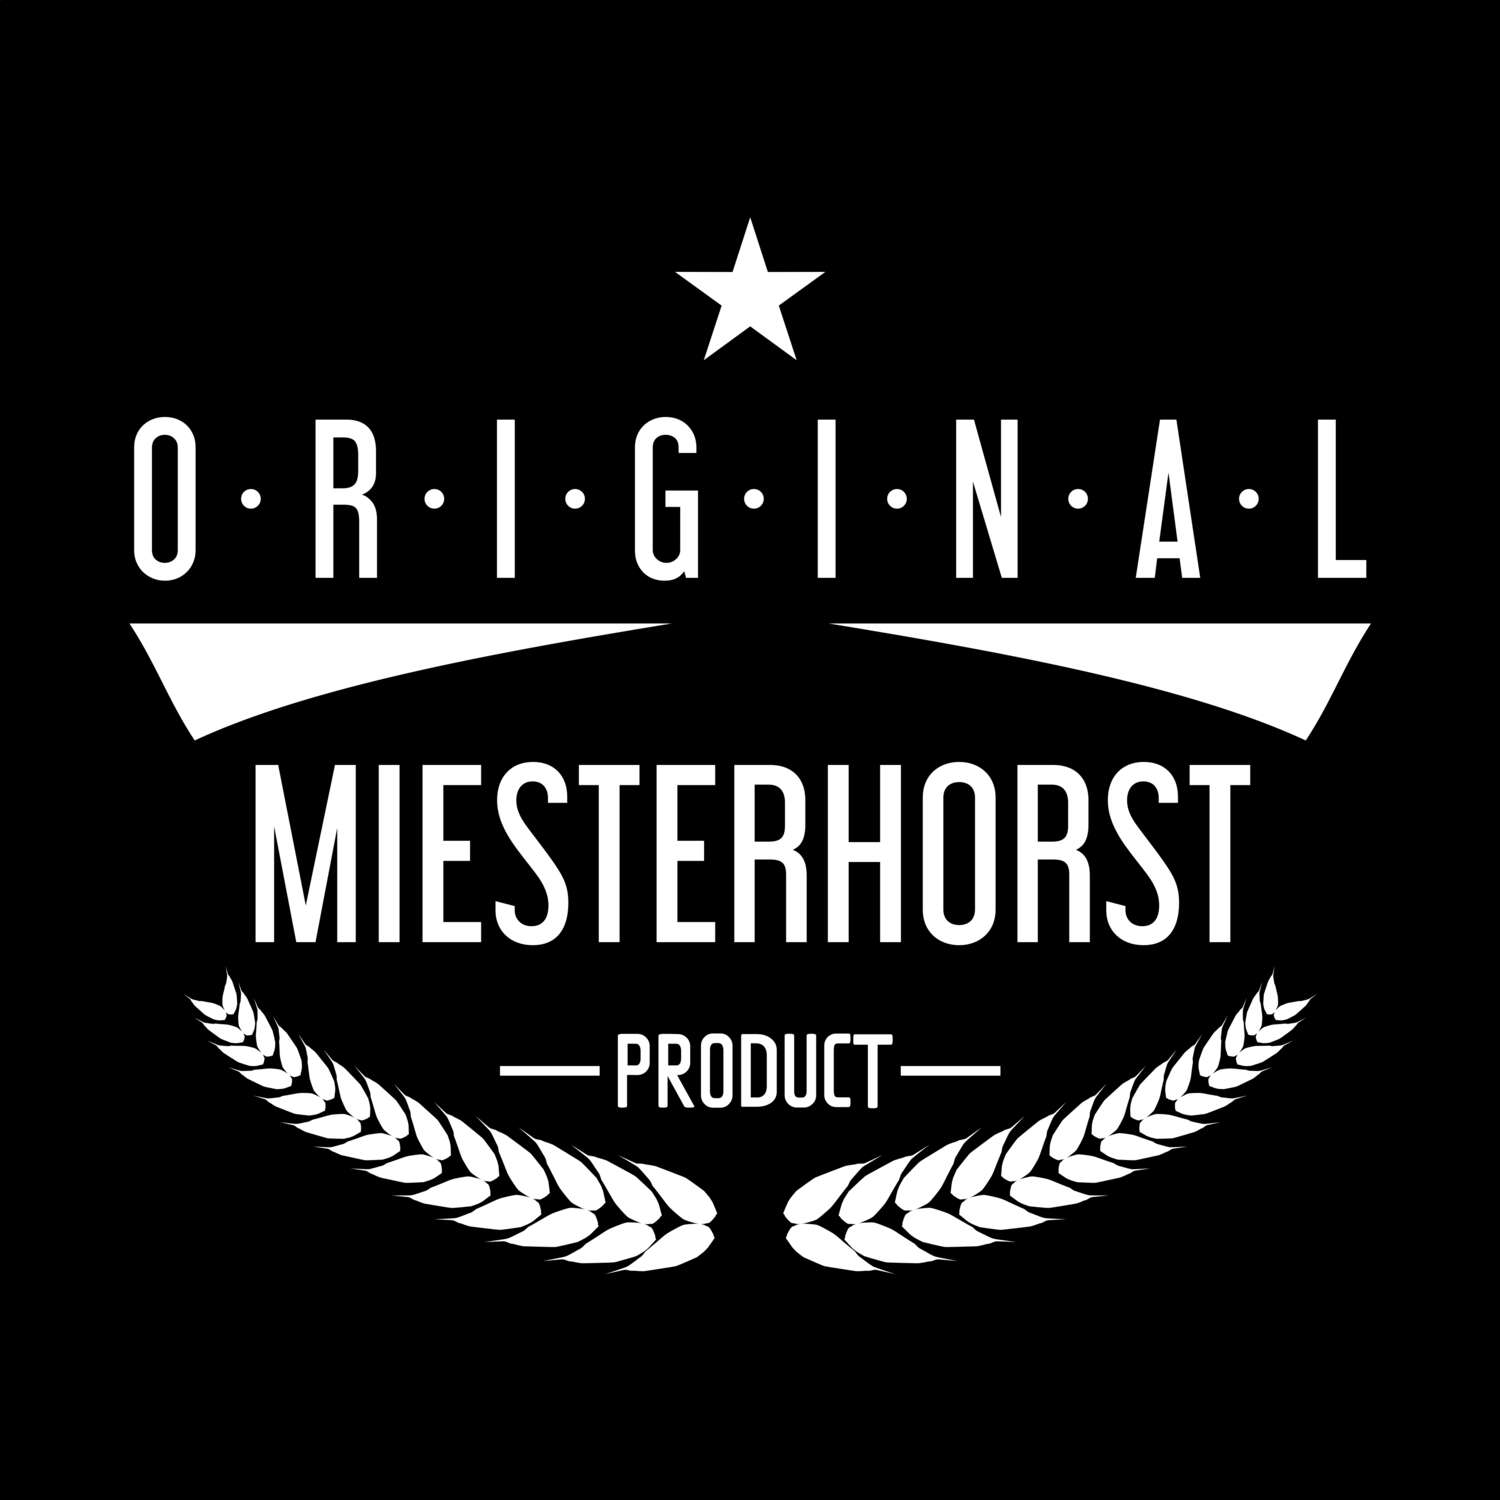 Miesterhorst T-Shirt »Original Product«